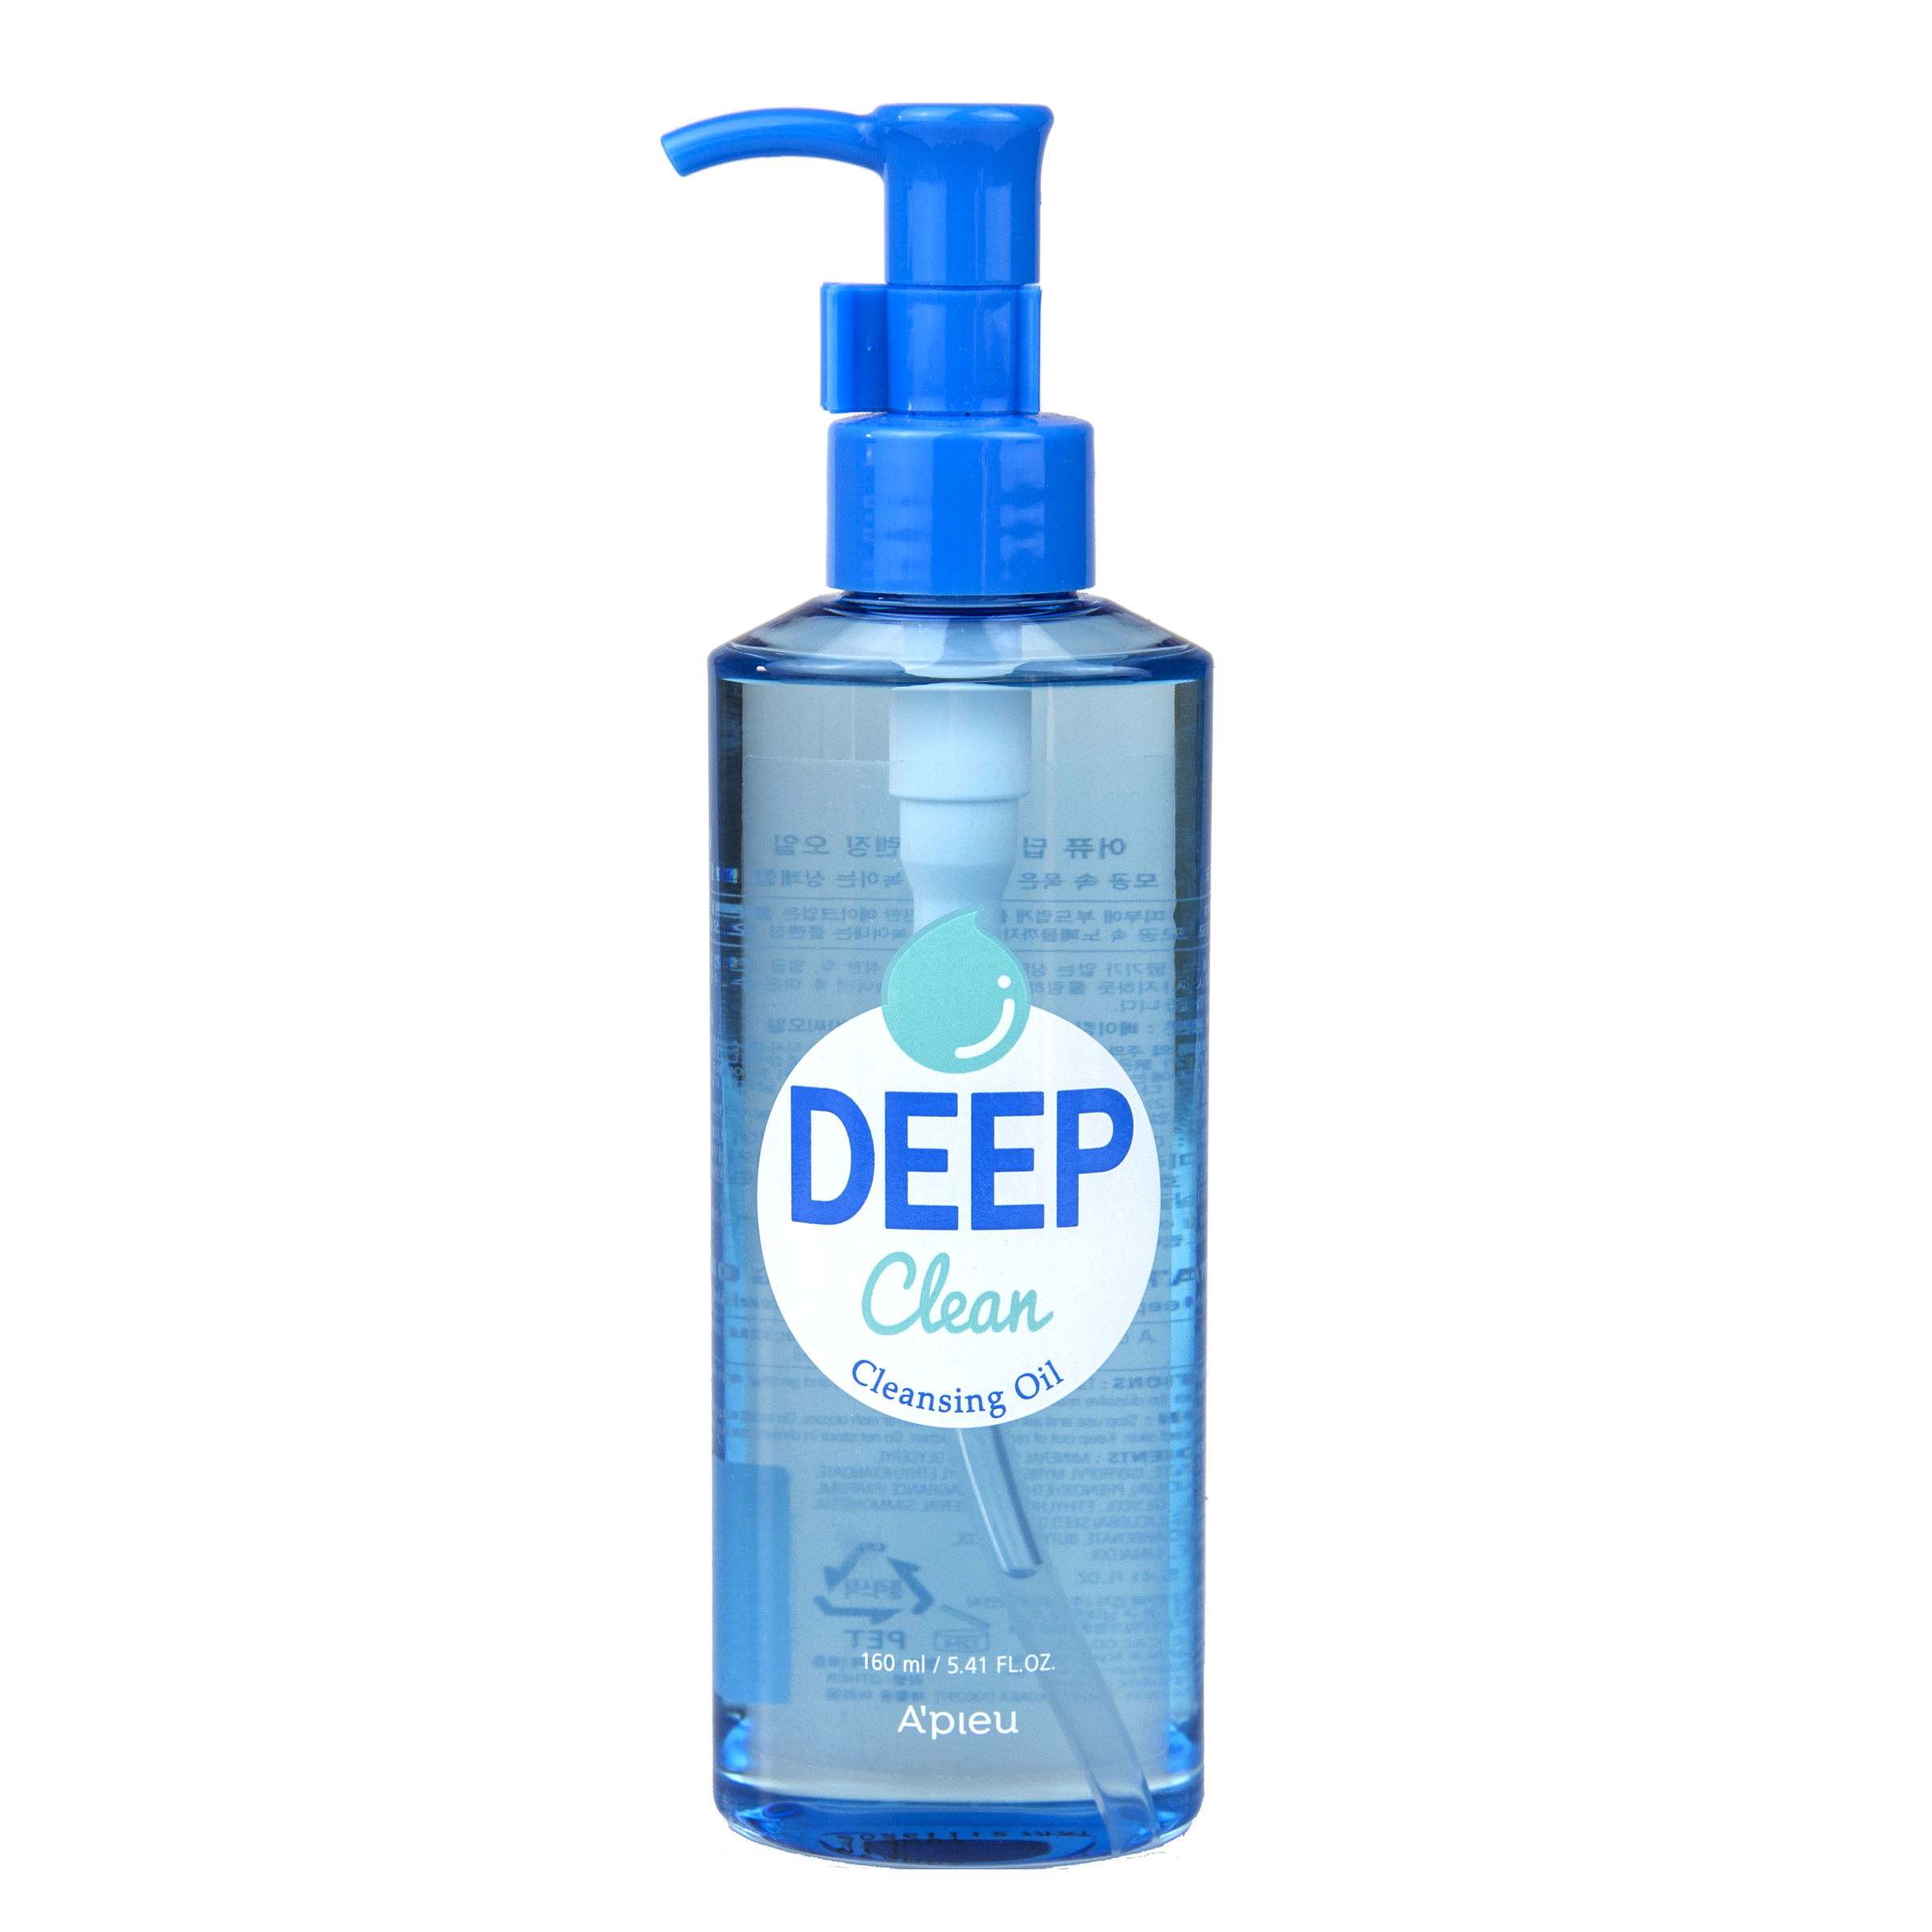 Deep Clean Cleansing Oil (160ml)